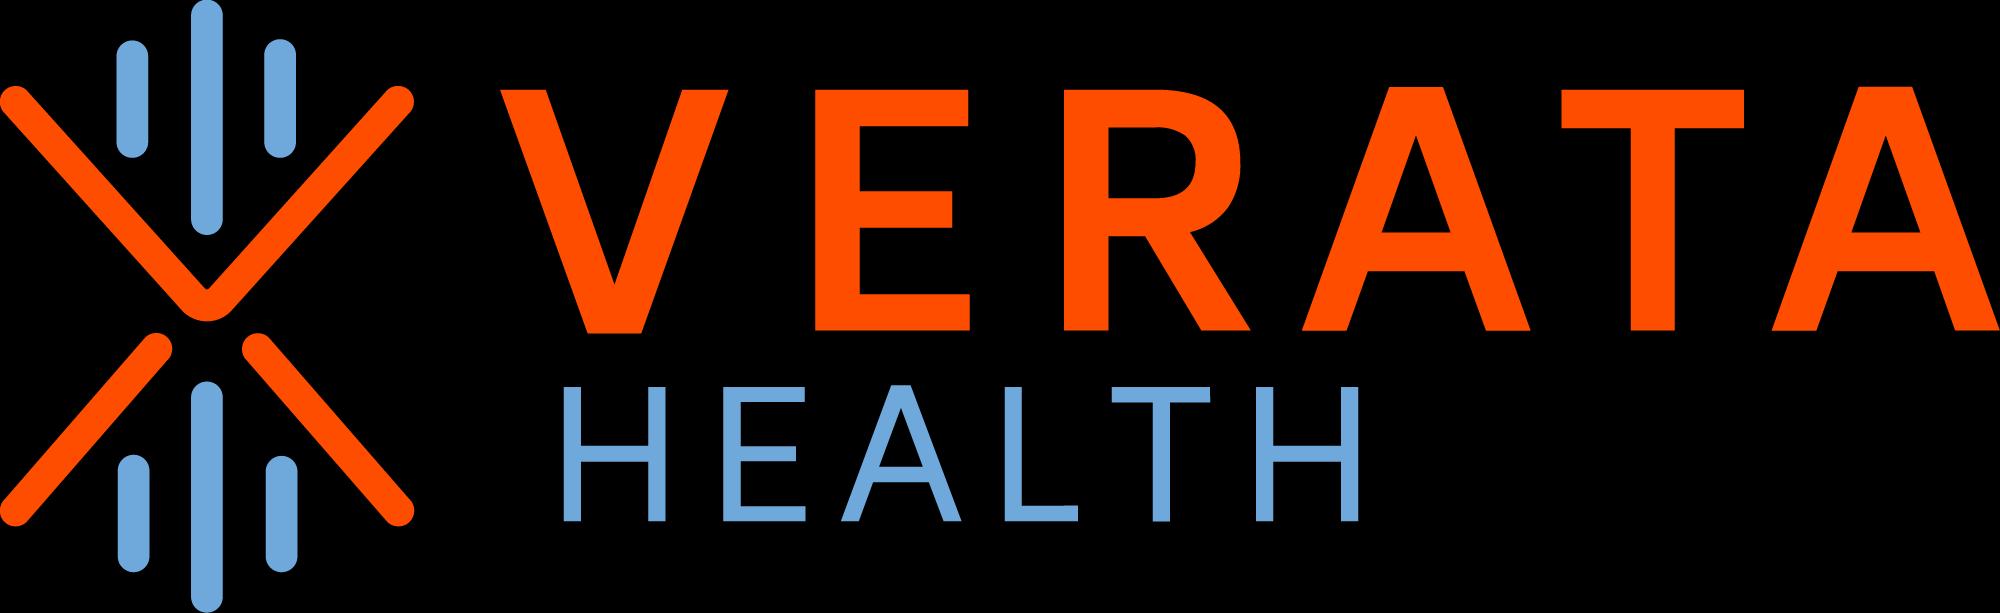 Verata Health_logo